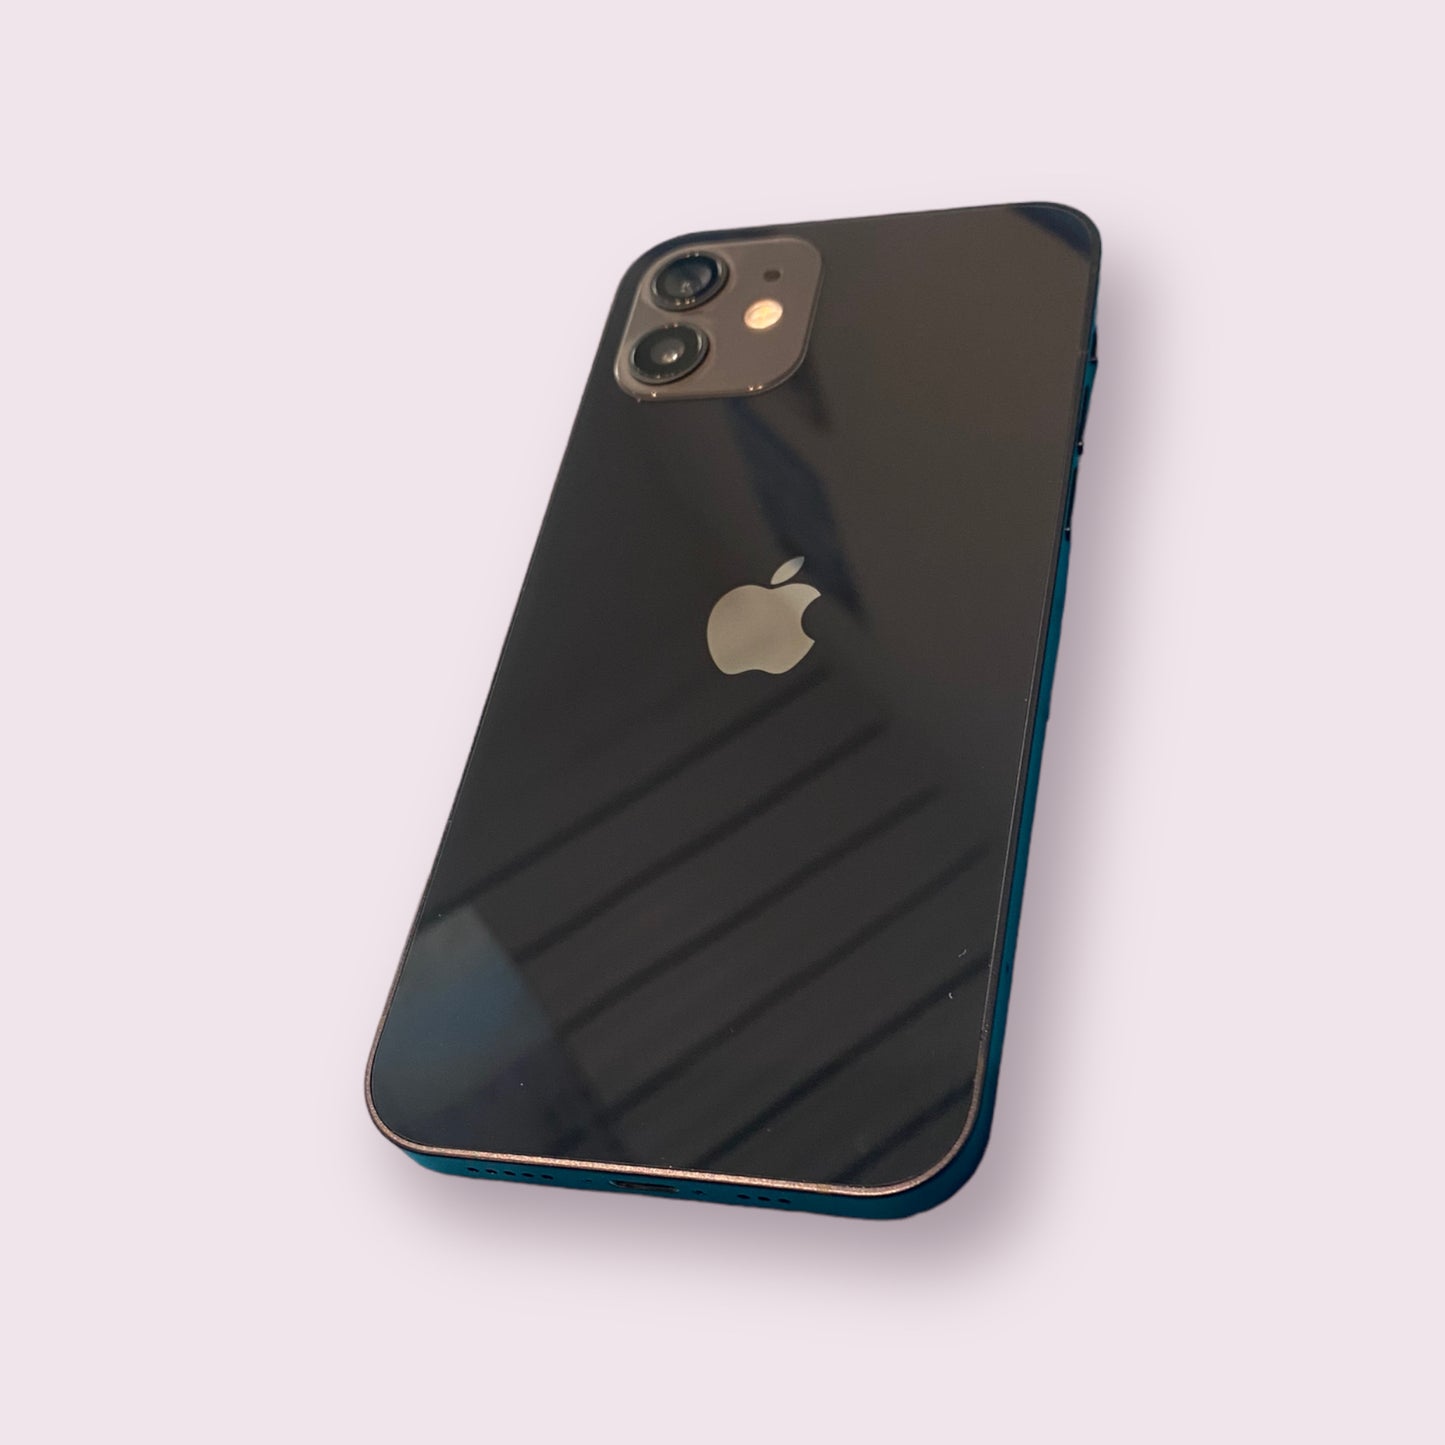 Apple iPhone 12 128GB Black - Unlocked - Grade A